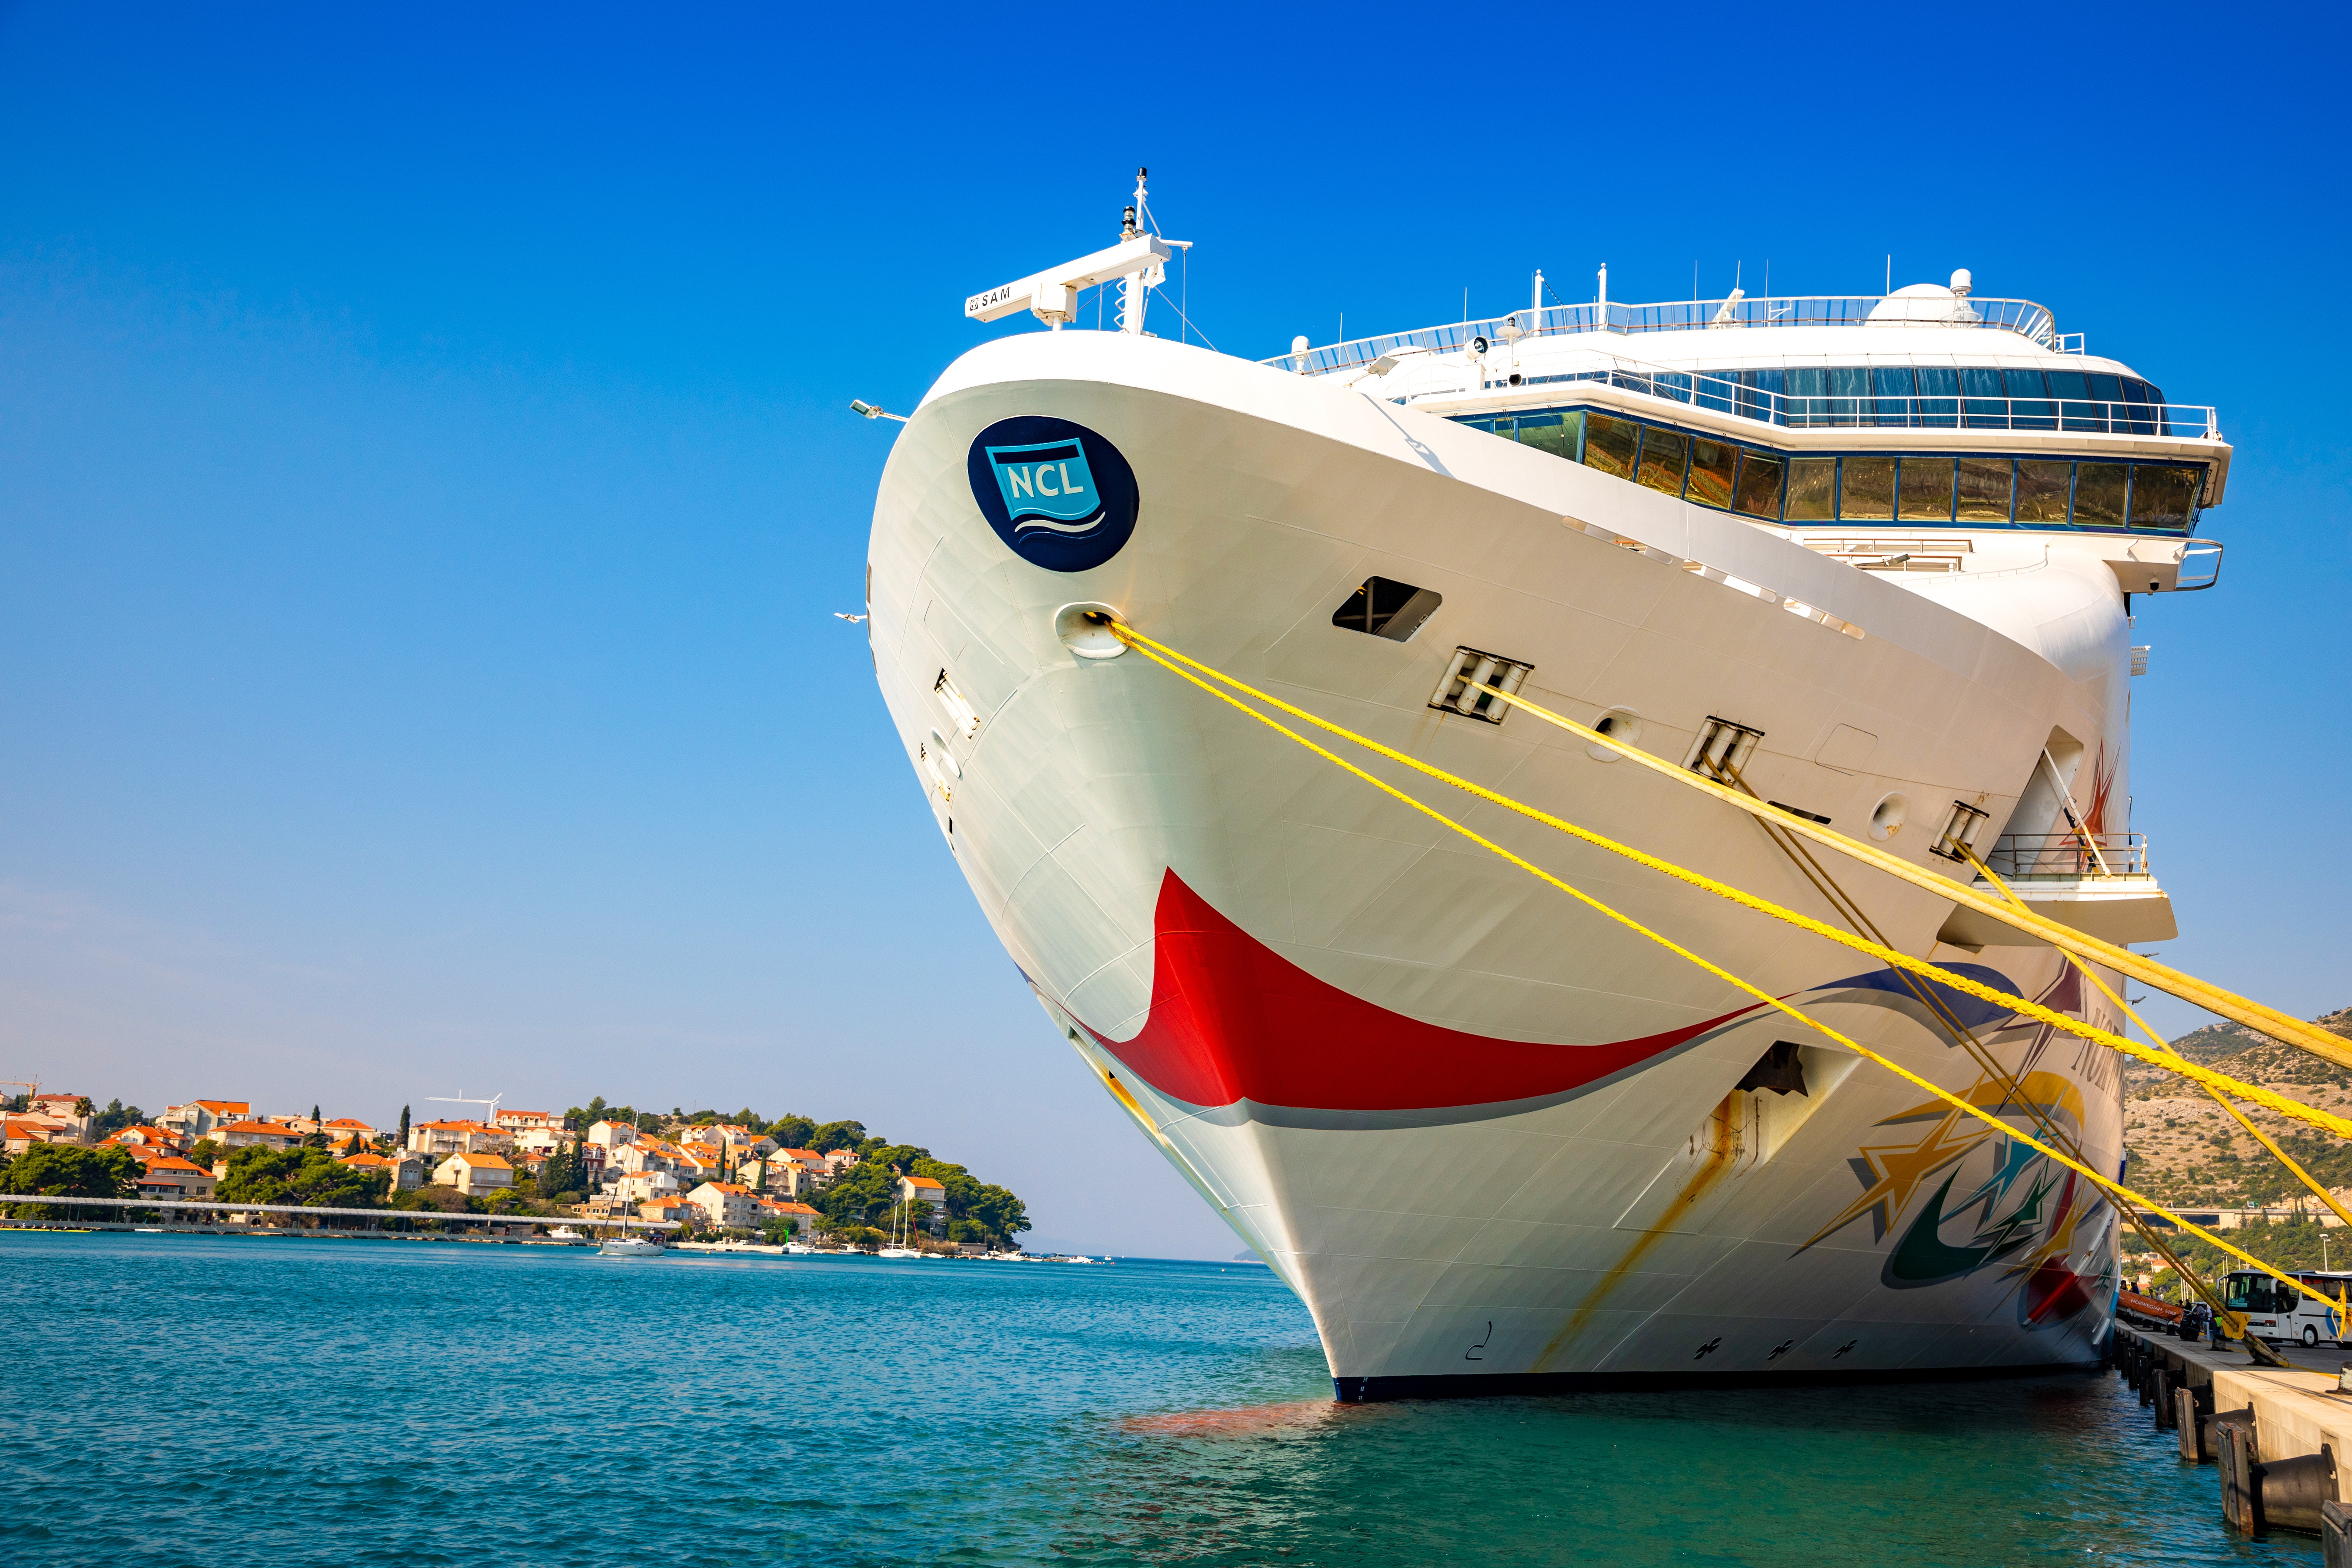 Jim Cramer Says He Dislikes Carnival, Prefers This Cruise Ship Stock With 'Better Balance Sheet'